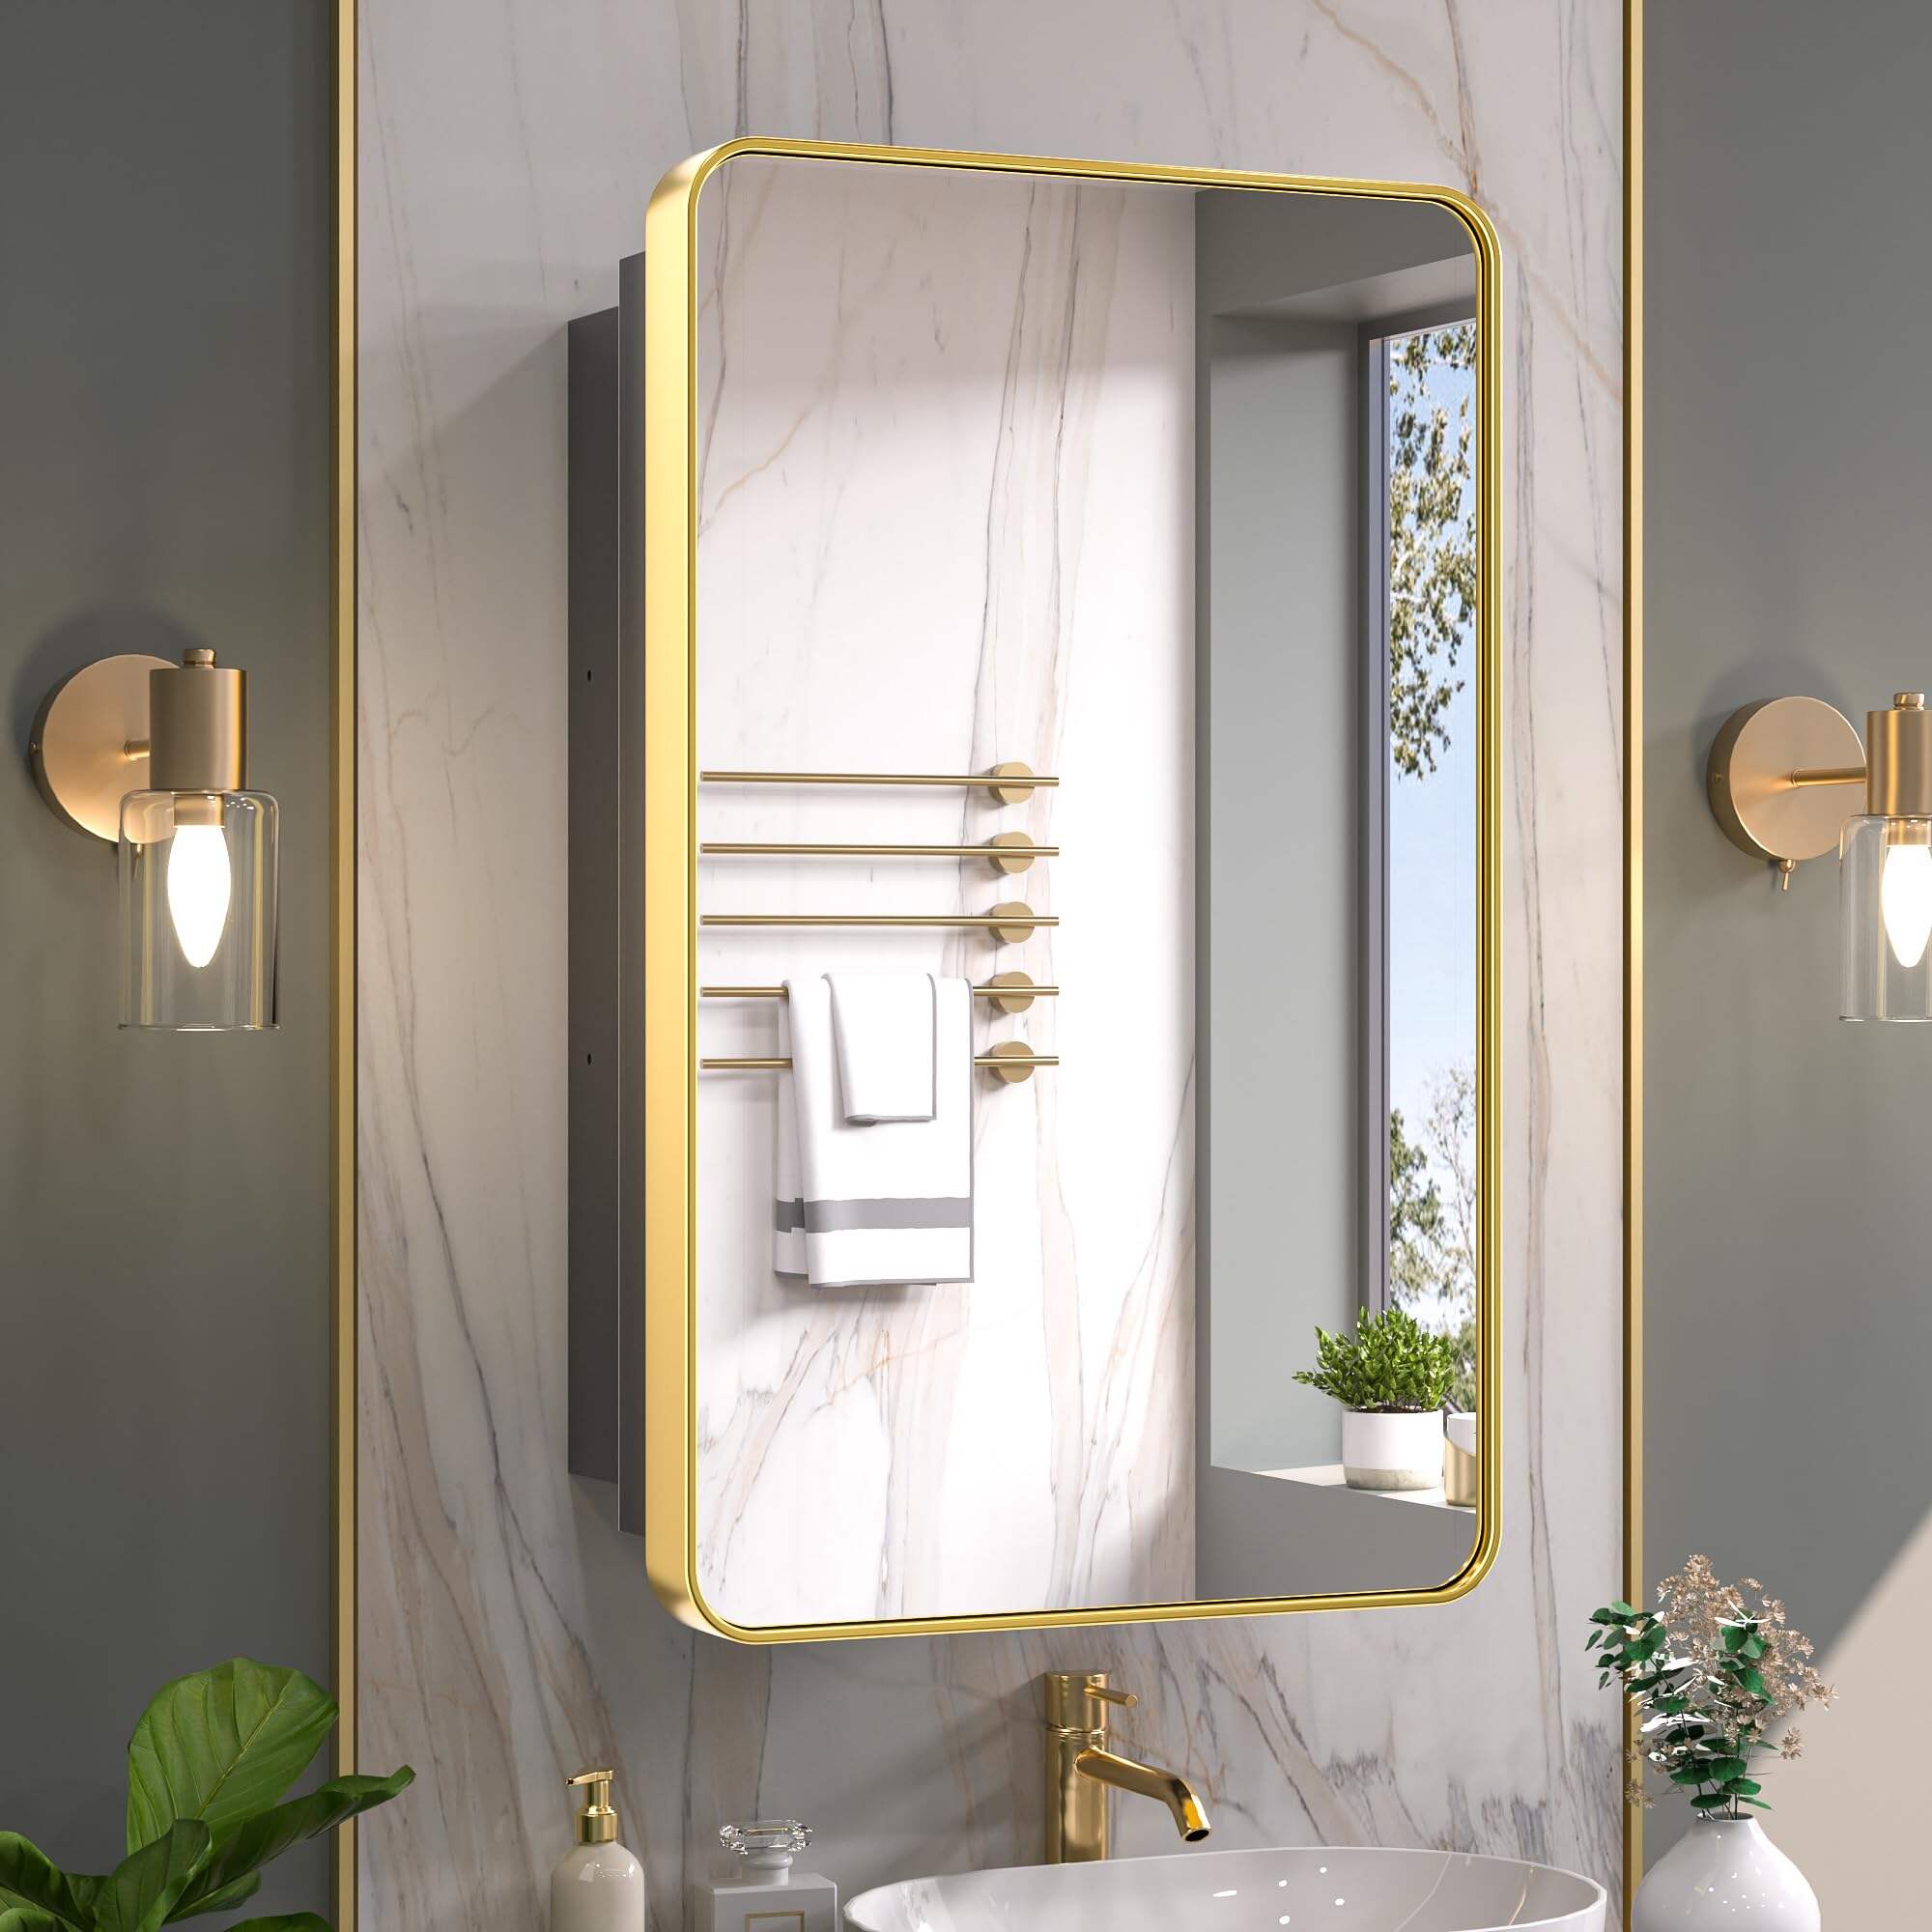 Foshan Haohan Smart Home Co., Ltd. کابینت های طبی طلایی آینه دار 20 x 32 اینچی برای قفسه های قابل تنظیم حمام با قاب تک درب مستطیل گرد دیواری کابینت های ذخیره سازی حمام توکار با آینه